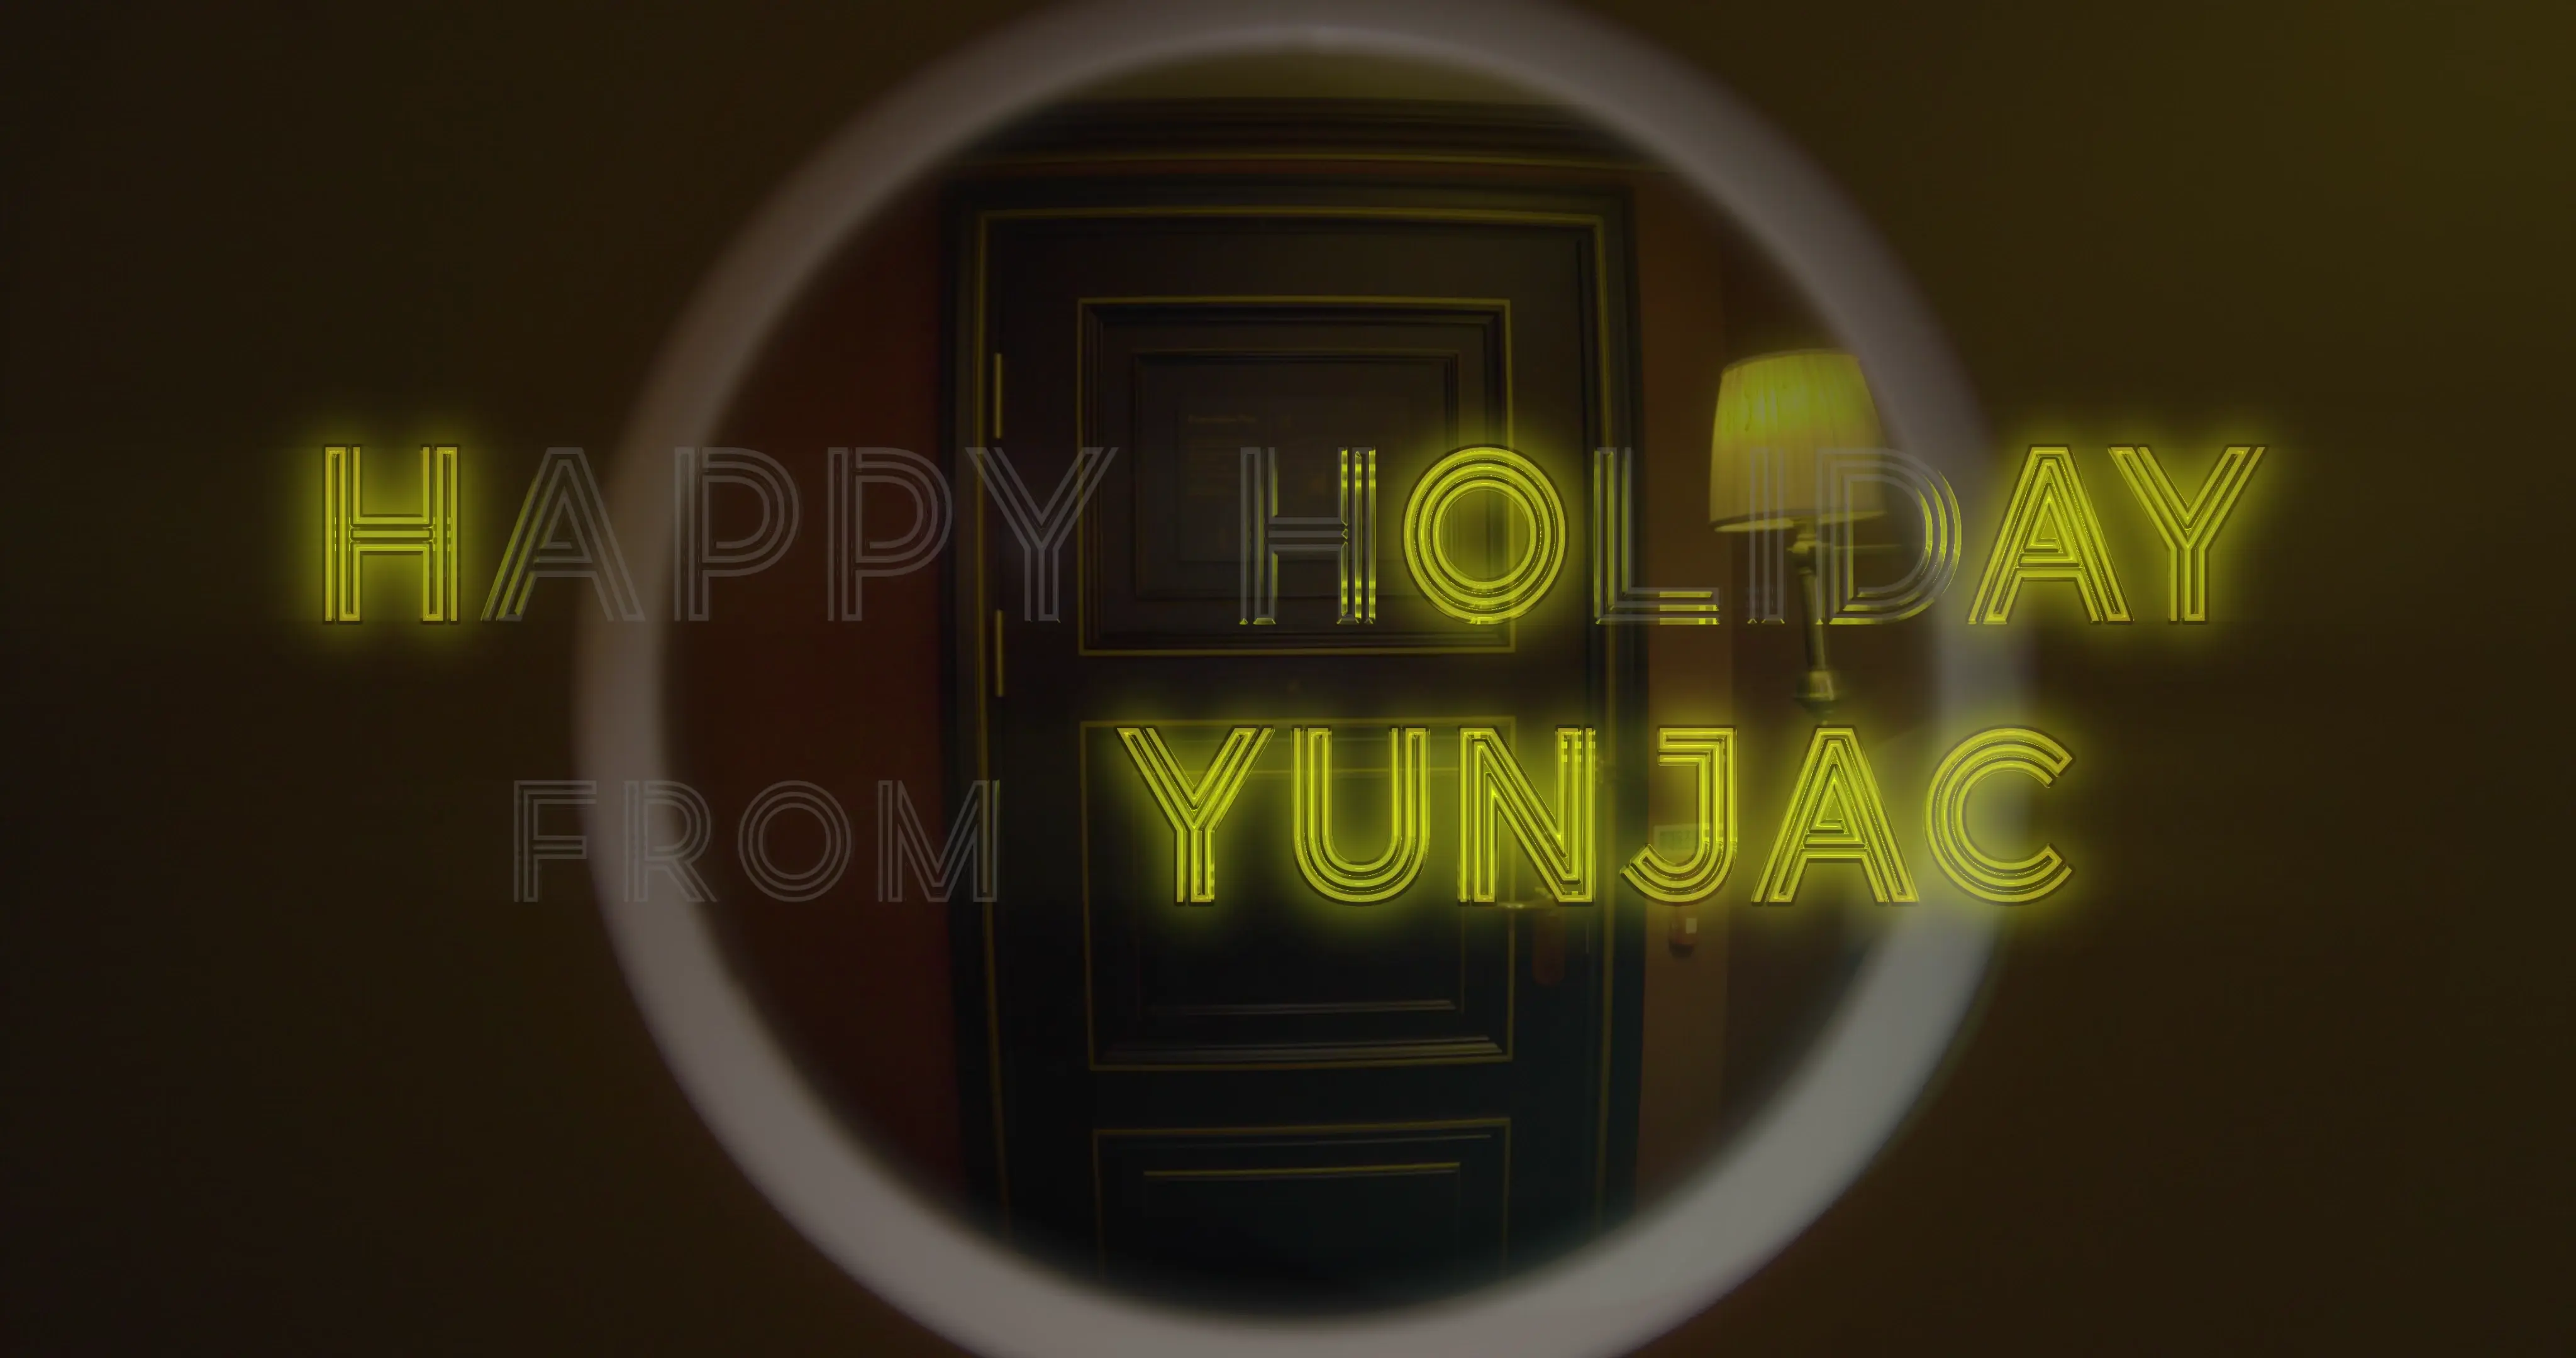 HAPPY HOLIDAY from YUNJAC